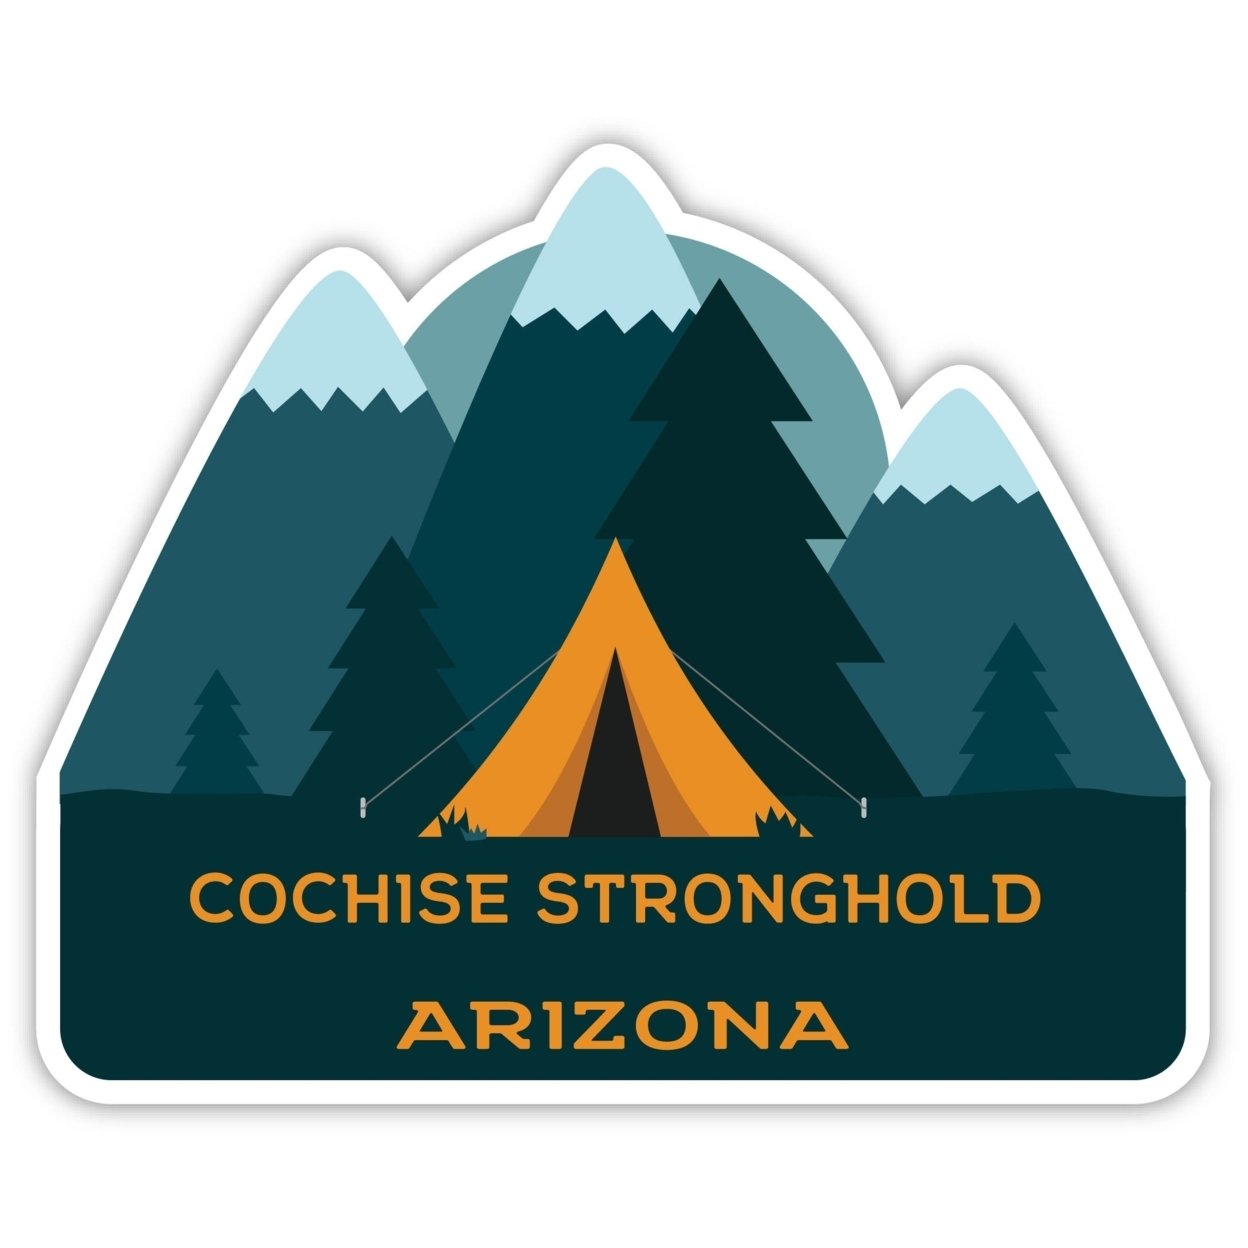 Cochise Stronghold Arizona Souvenir Decorative Stickers (Choose Theme And Size) - Single Unit, 8-Inch, Tent